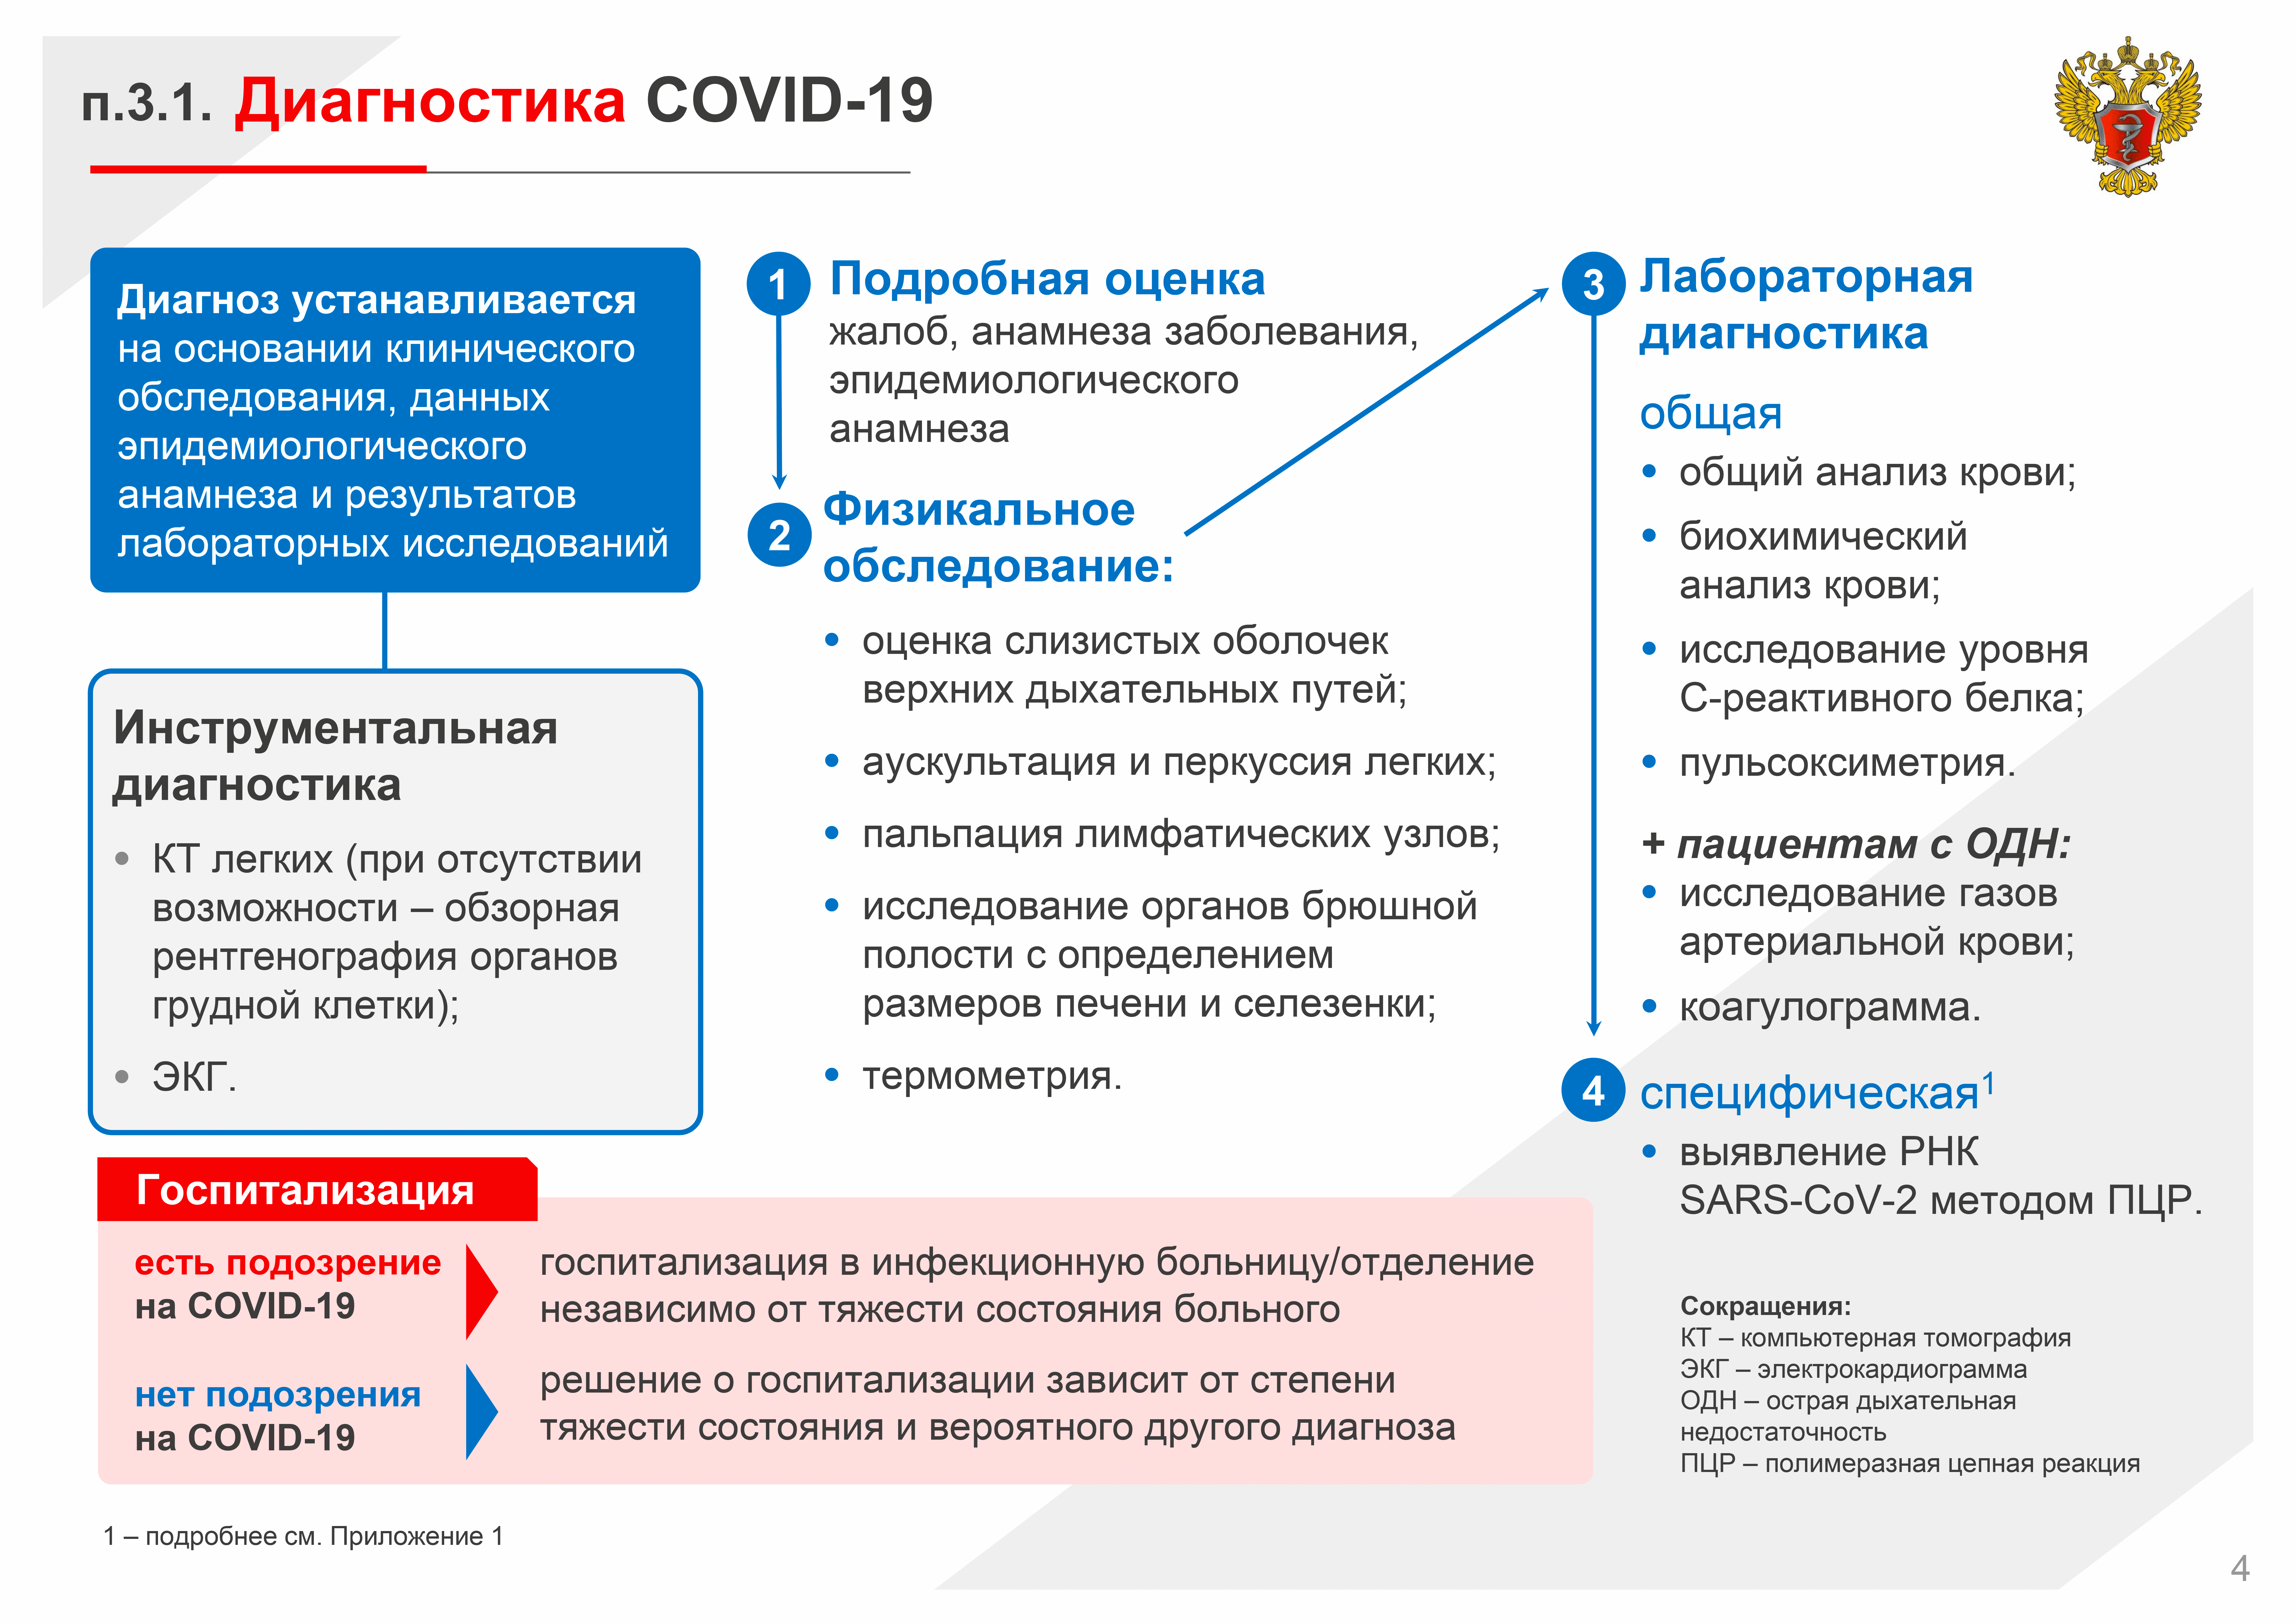 Коронавирус ковид 19